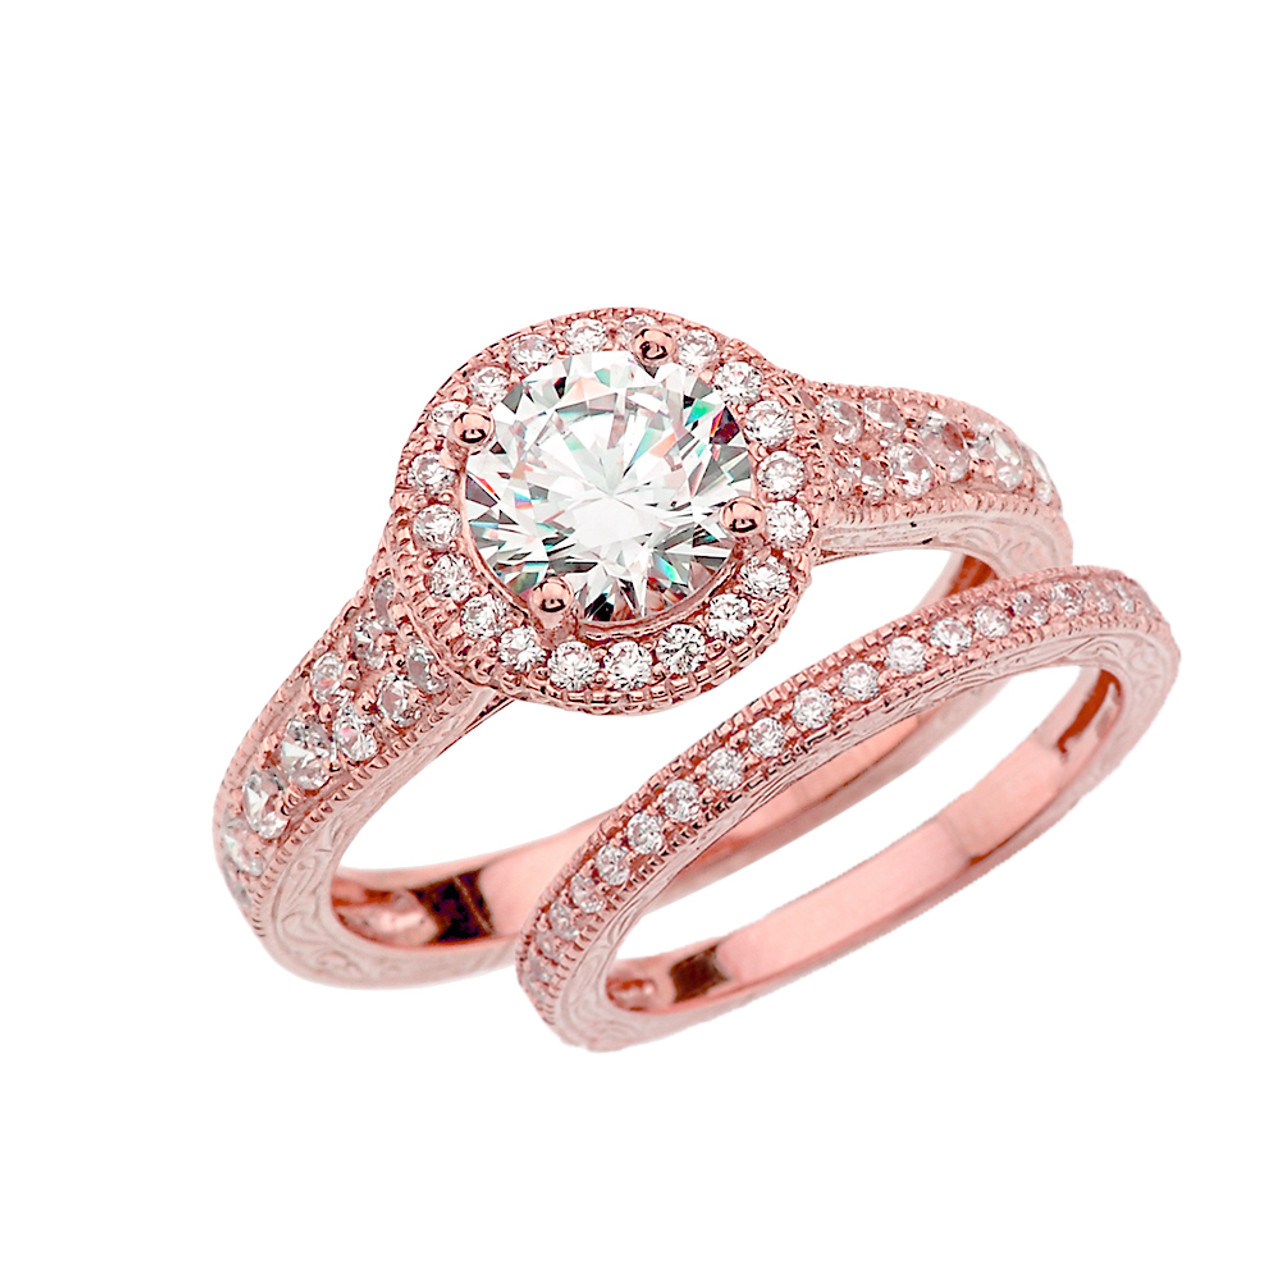 Cubic Zirconia Wedding Rings Gold - Wedding Rings Sets Ideas